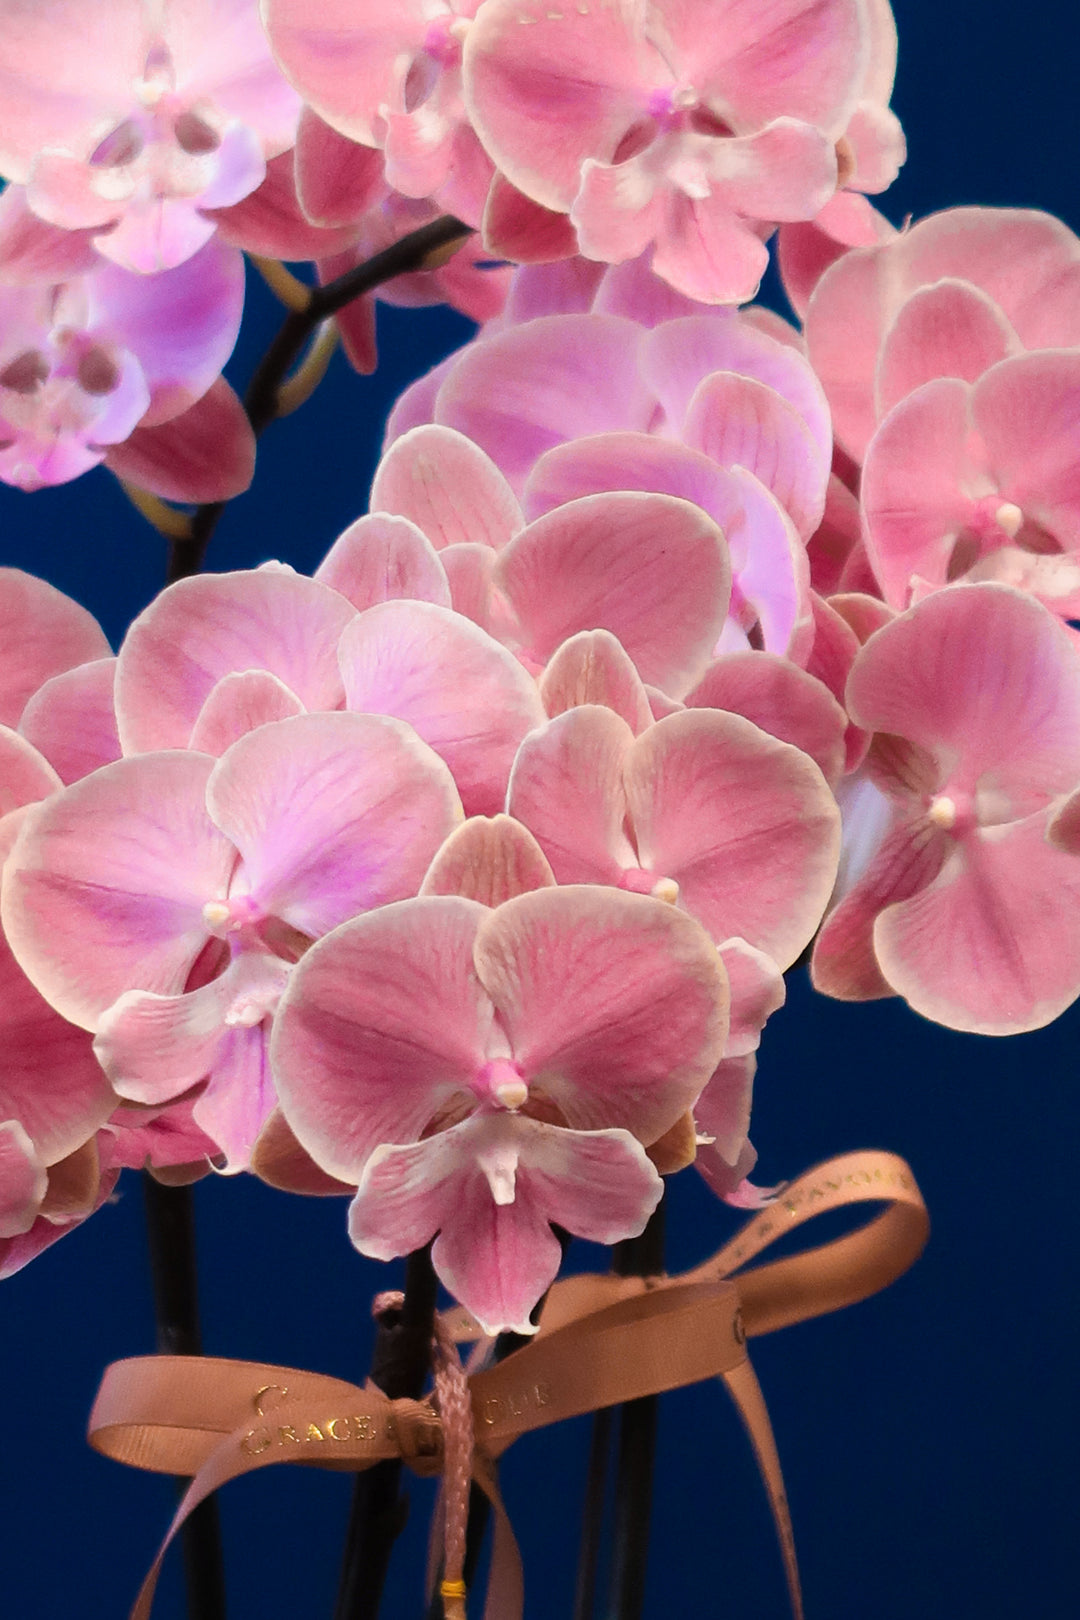 CNY2024 | Pastel Phalaenopsis Orchids - Porcelain